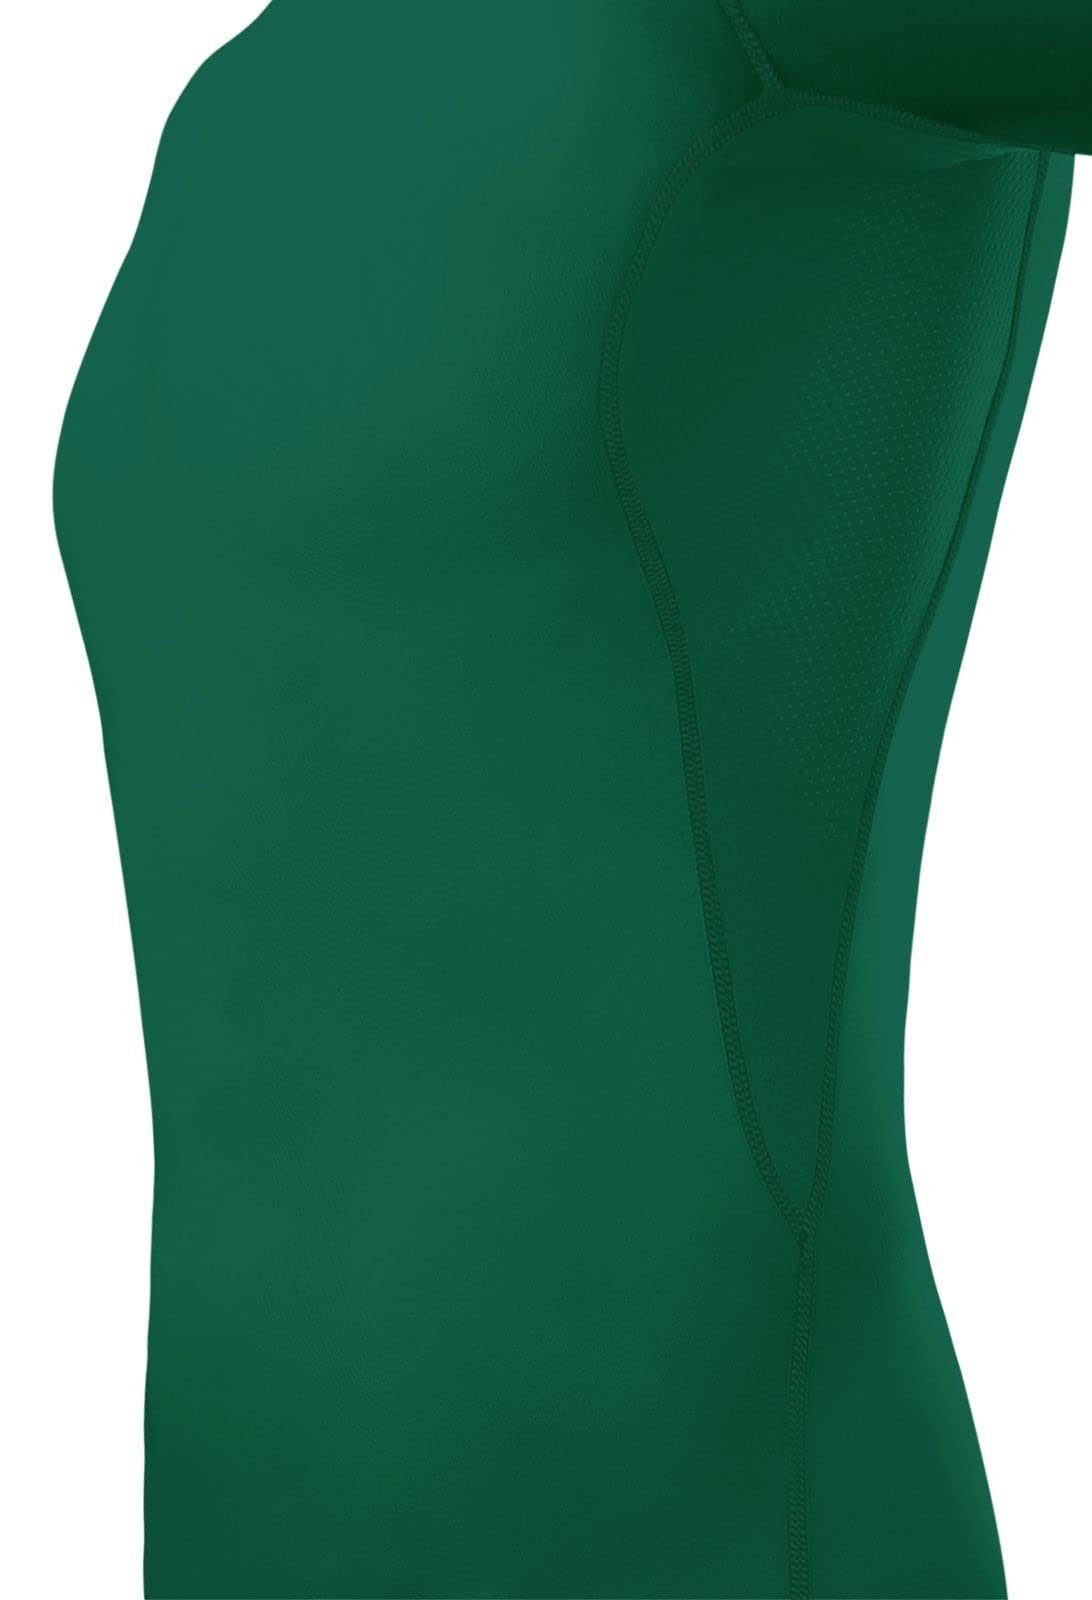 Herren HyperFusion - kurzärmlig, Grün elastisch TCA Funktionsunterhemd TCA Sportshirt,